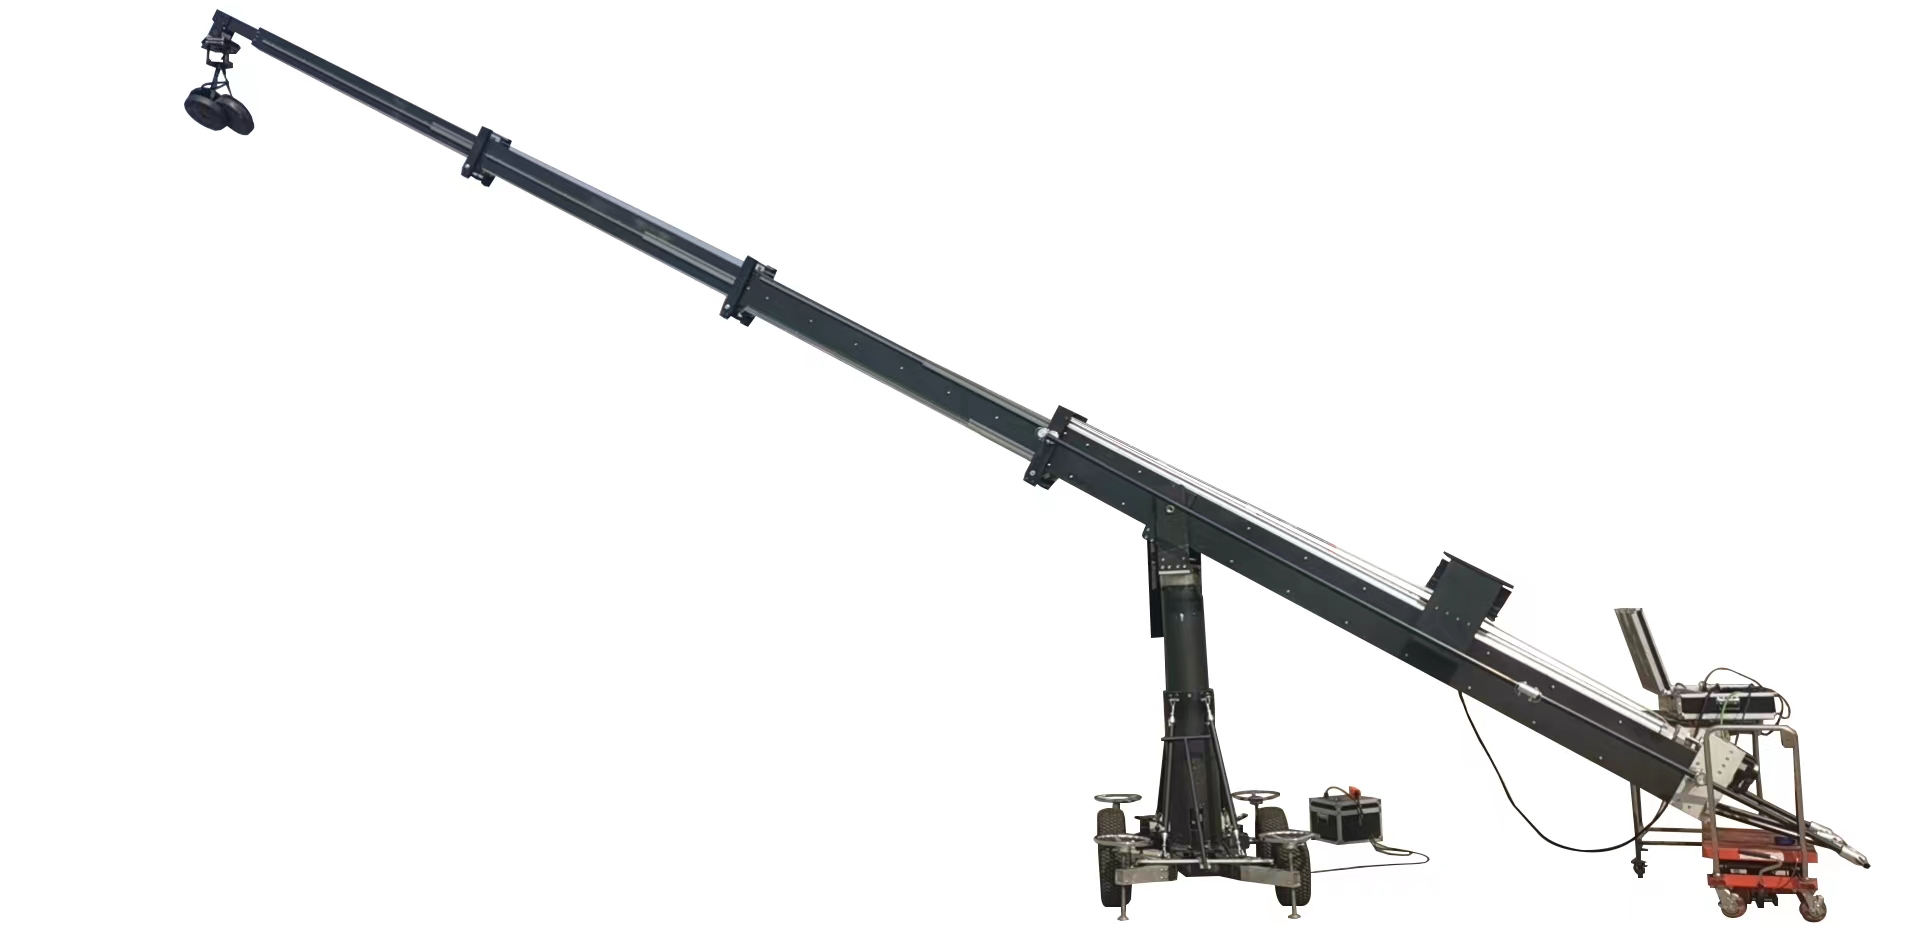 telescopic camera crane